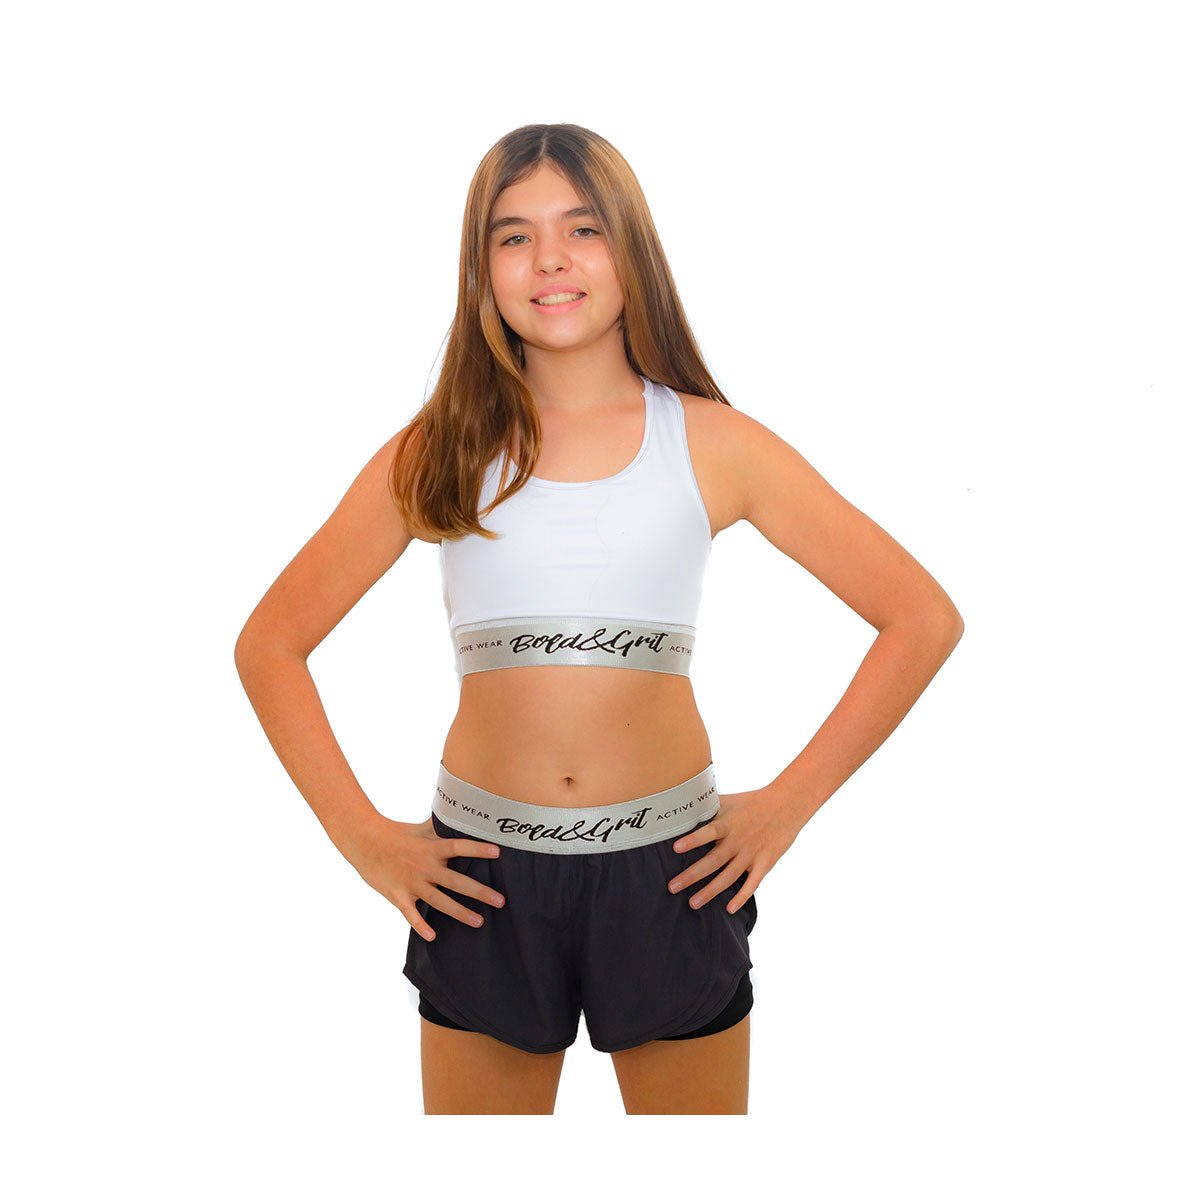 Girls in Sports Bras on X: Gym shorts need love too #girlsinsportsbras   / X